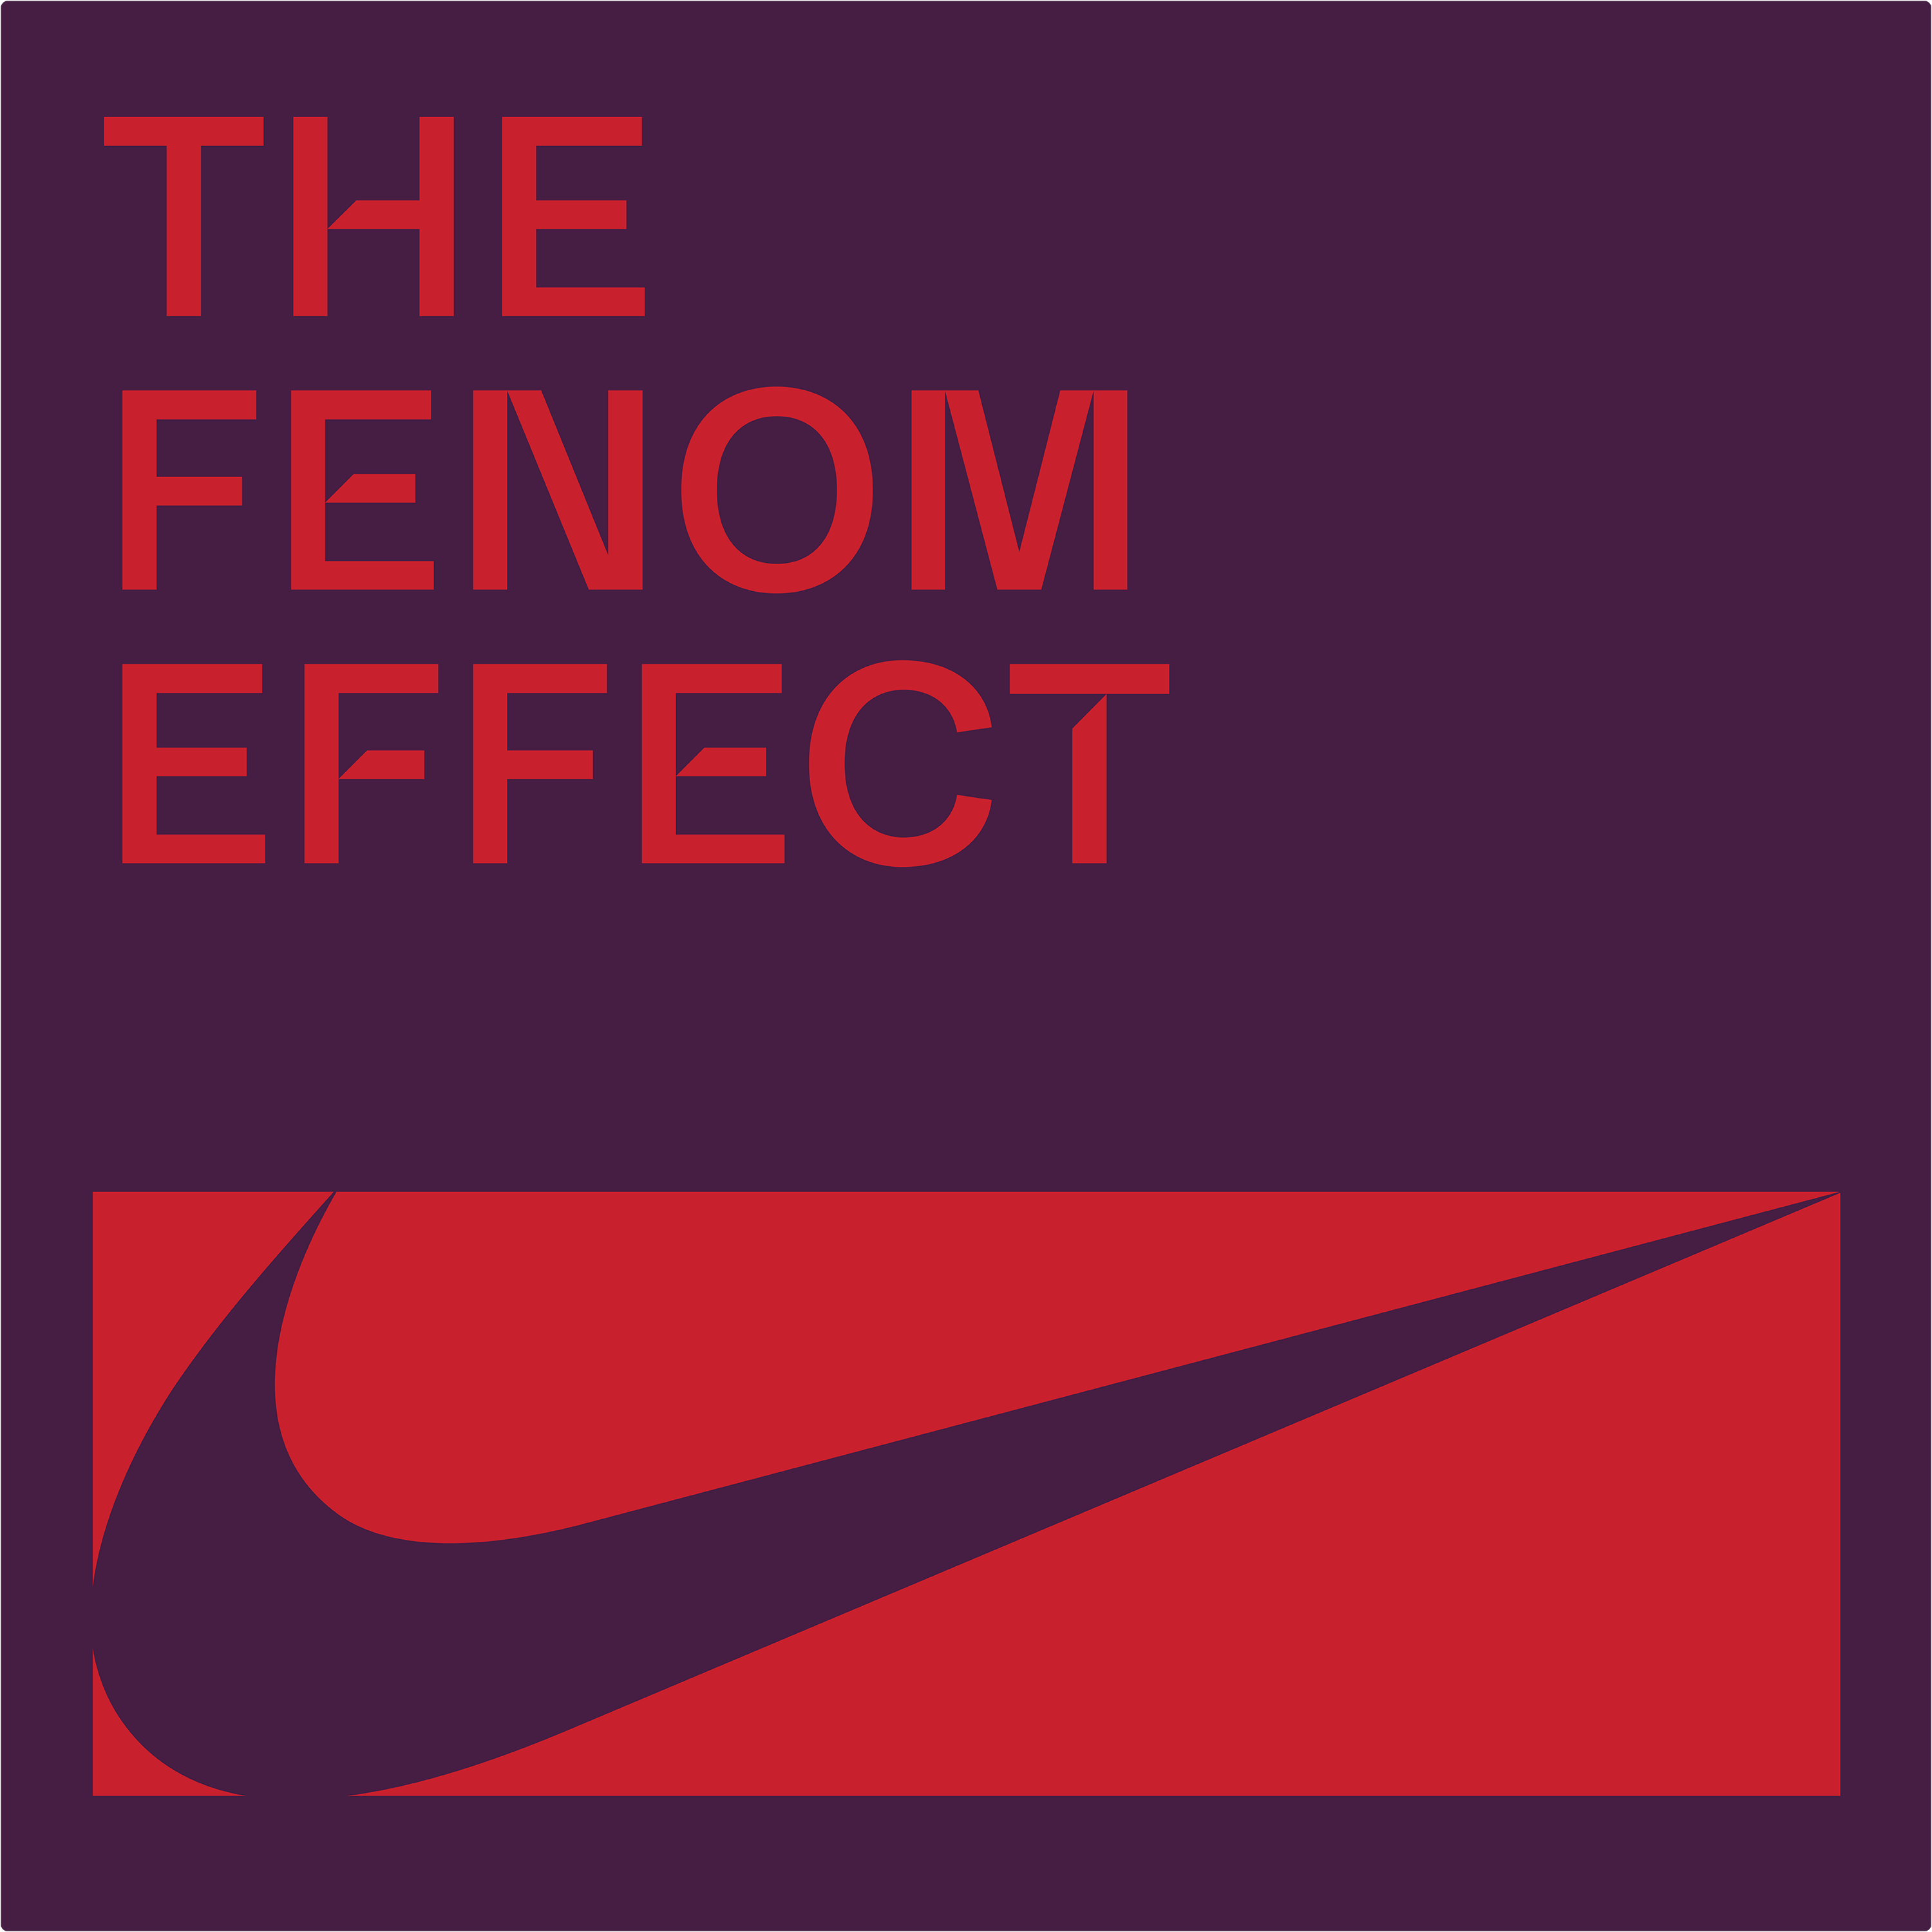 THE FENOM EFFECT